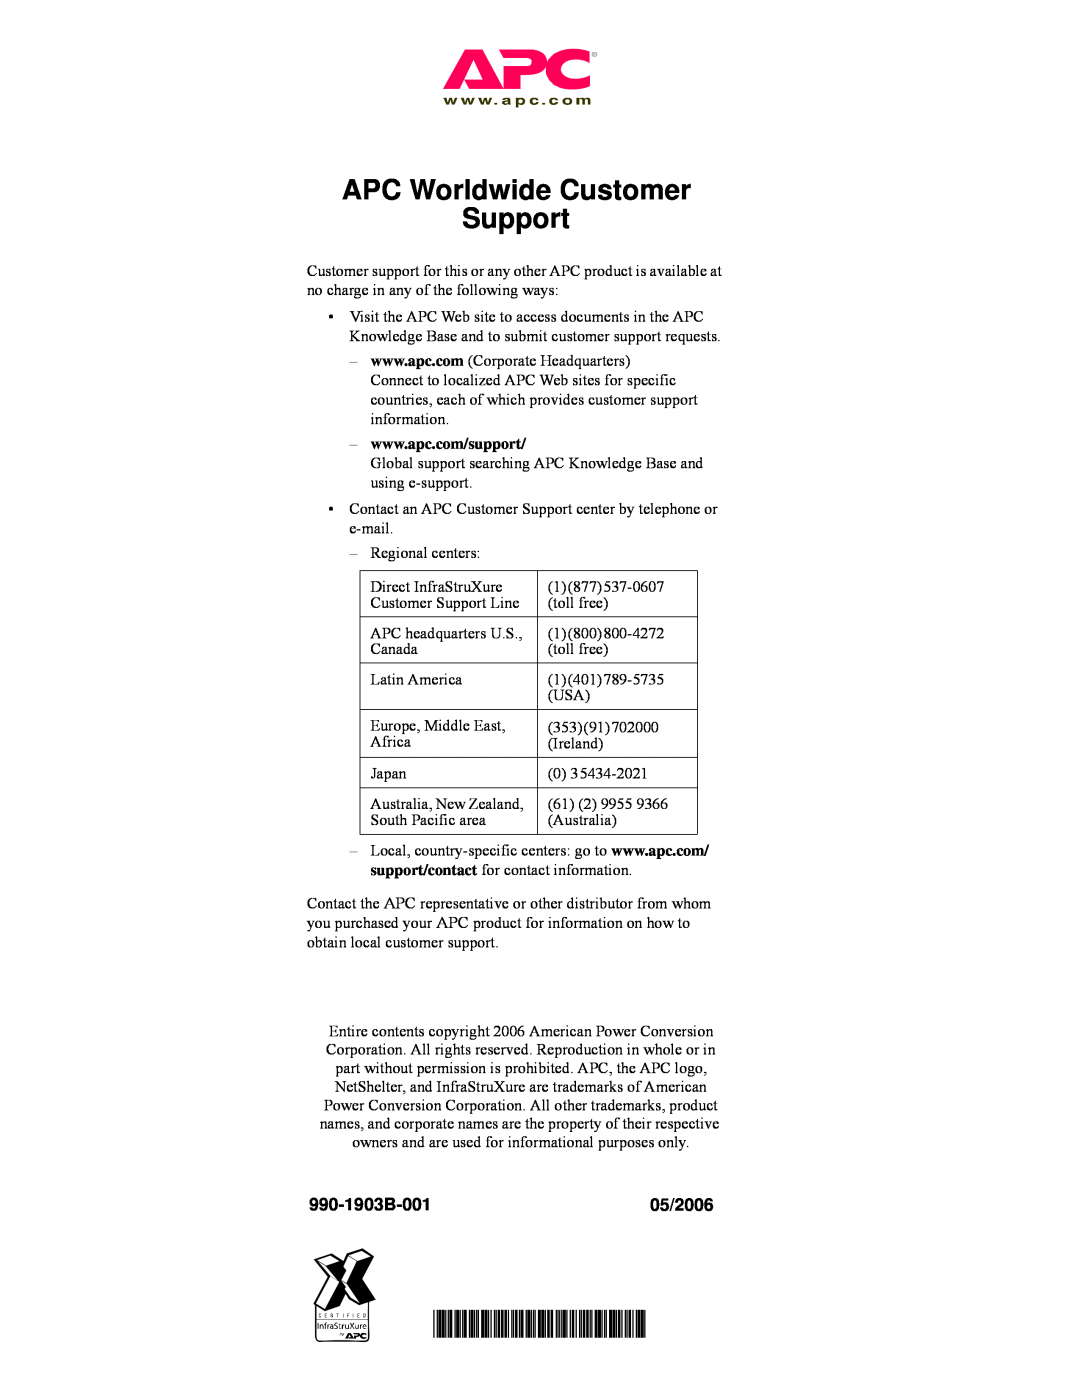 APC AP7820, pdu0123b manual APC Worldwide Customer Support, 990-1903B-00105/2006 